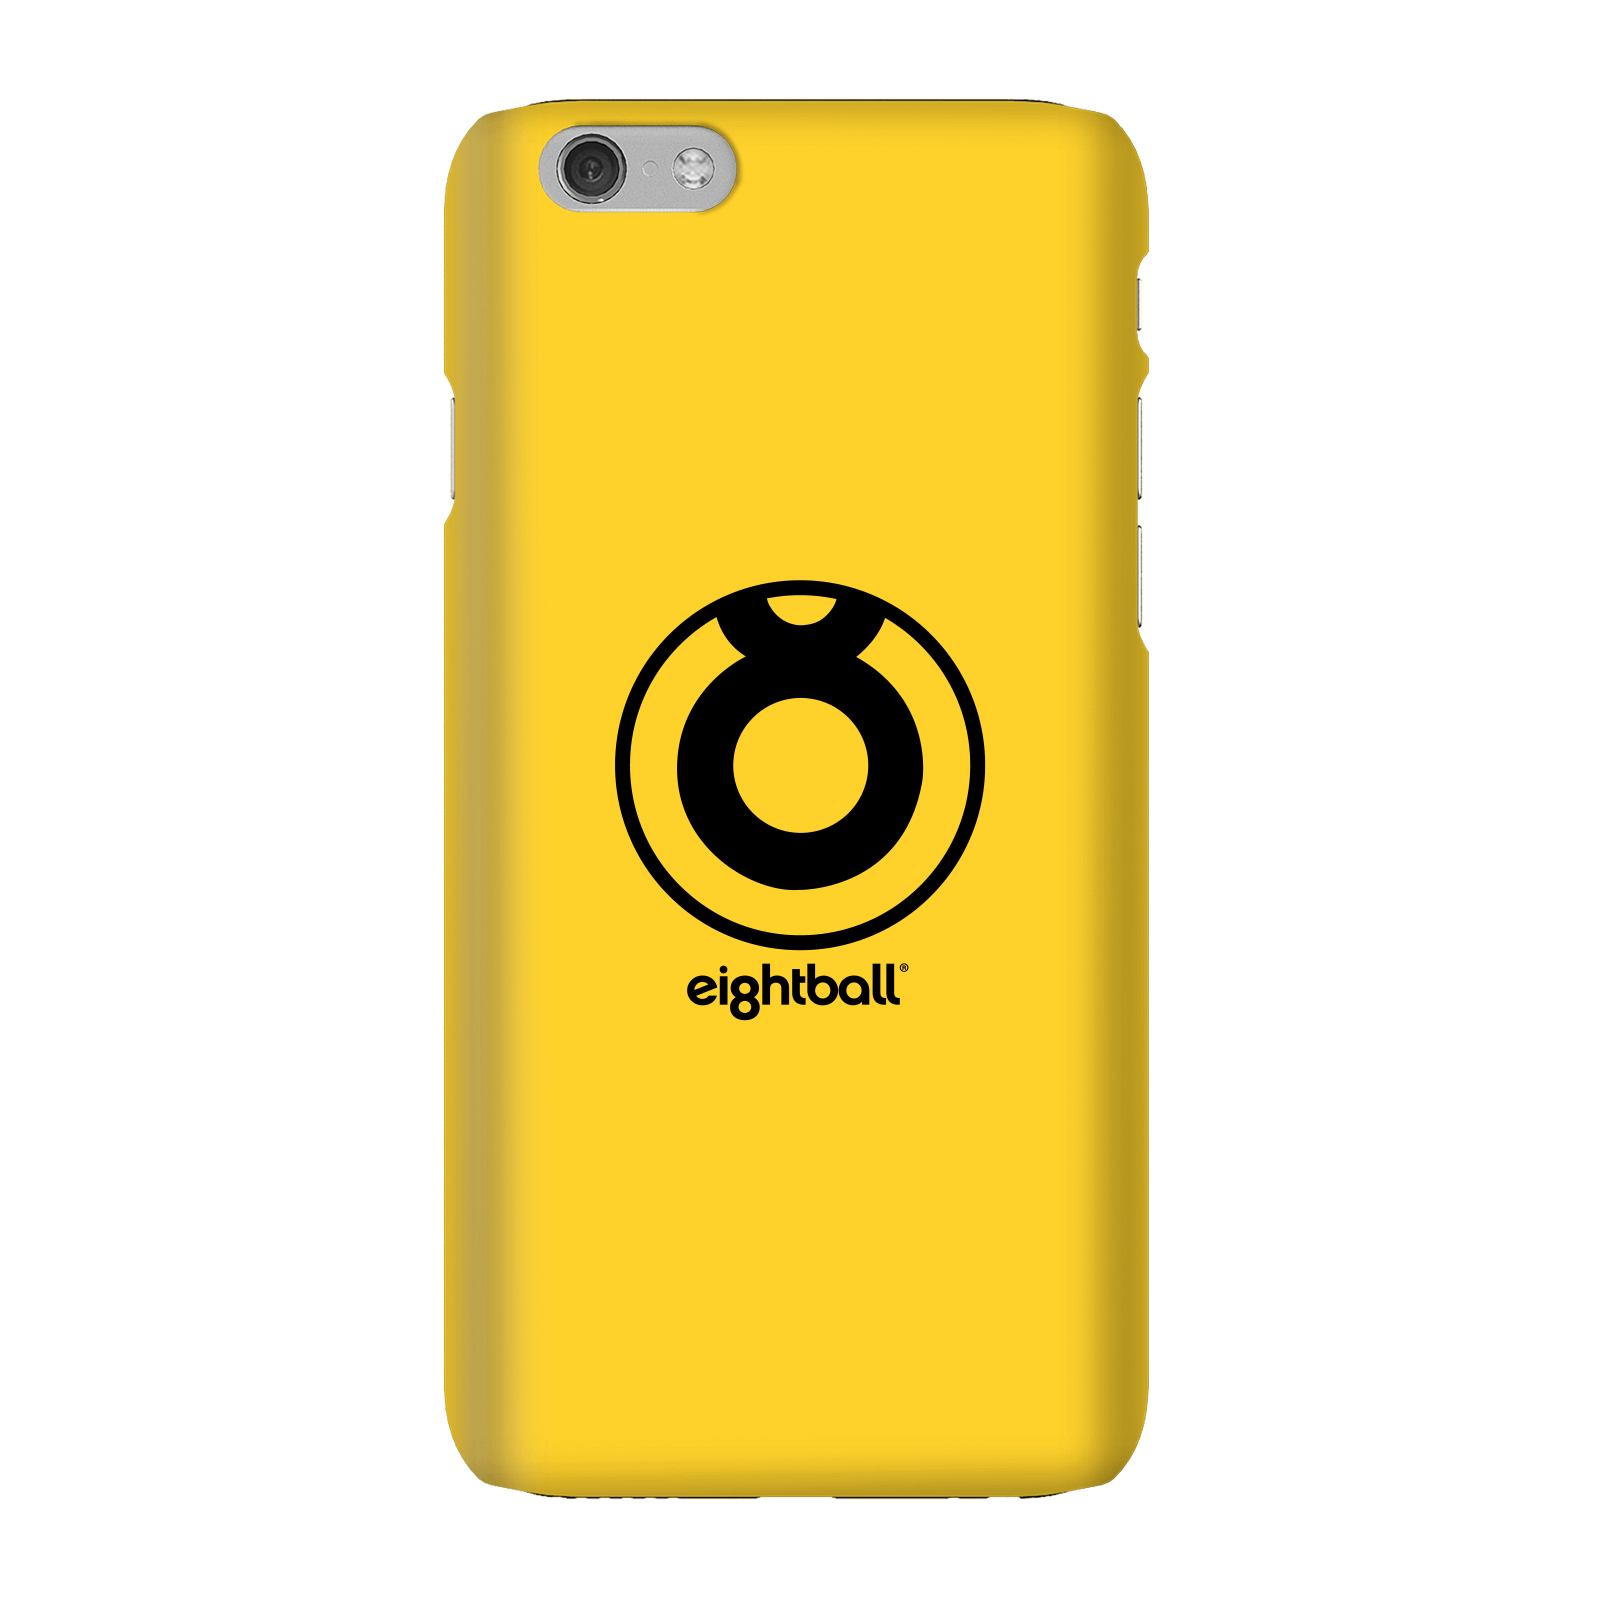 Funda Móvil Ei8htball Large Circle Logo para iPhone y Android - iPhone 6 - Carcasa rígida - Brillante